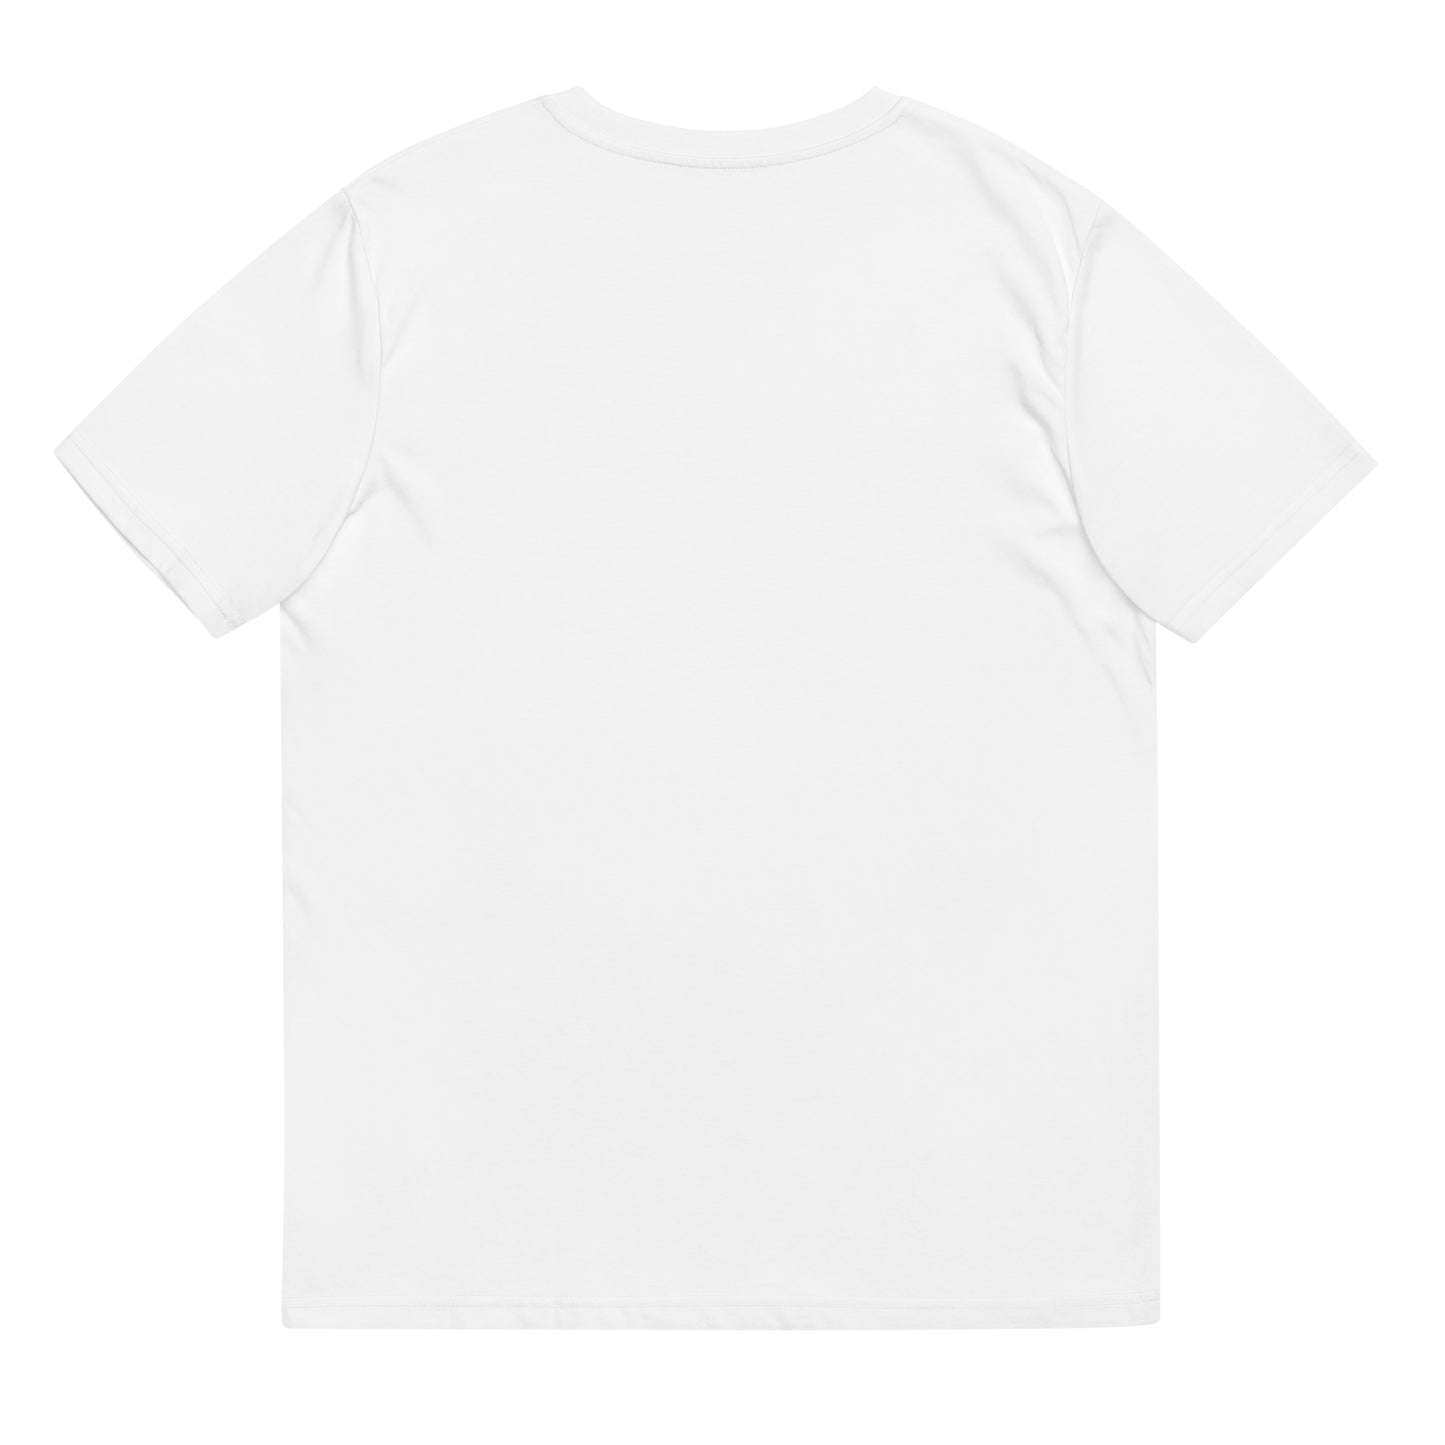 Kimberly - T-shirt unisexe en coton biologique